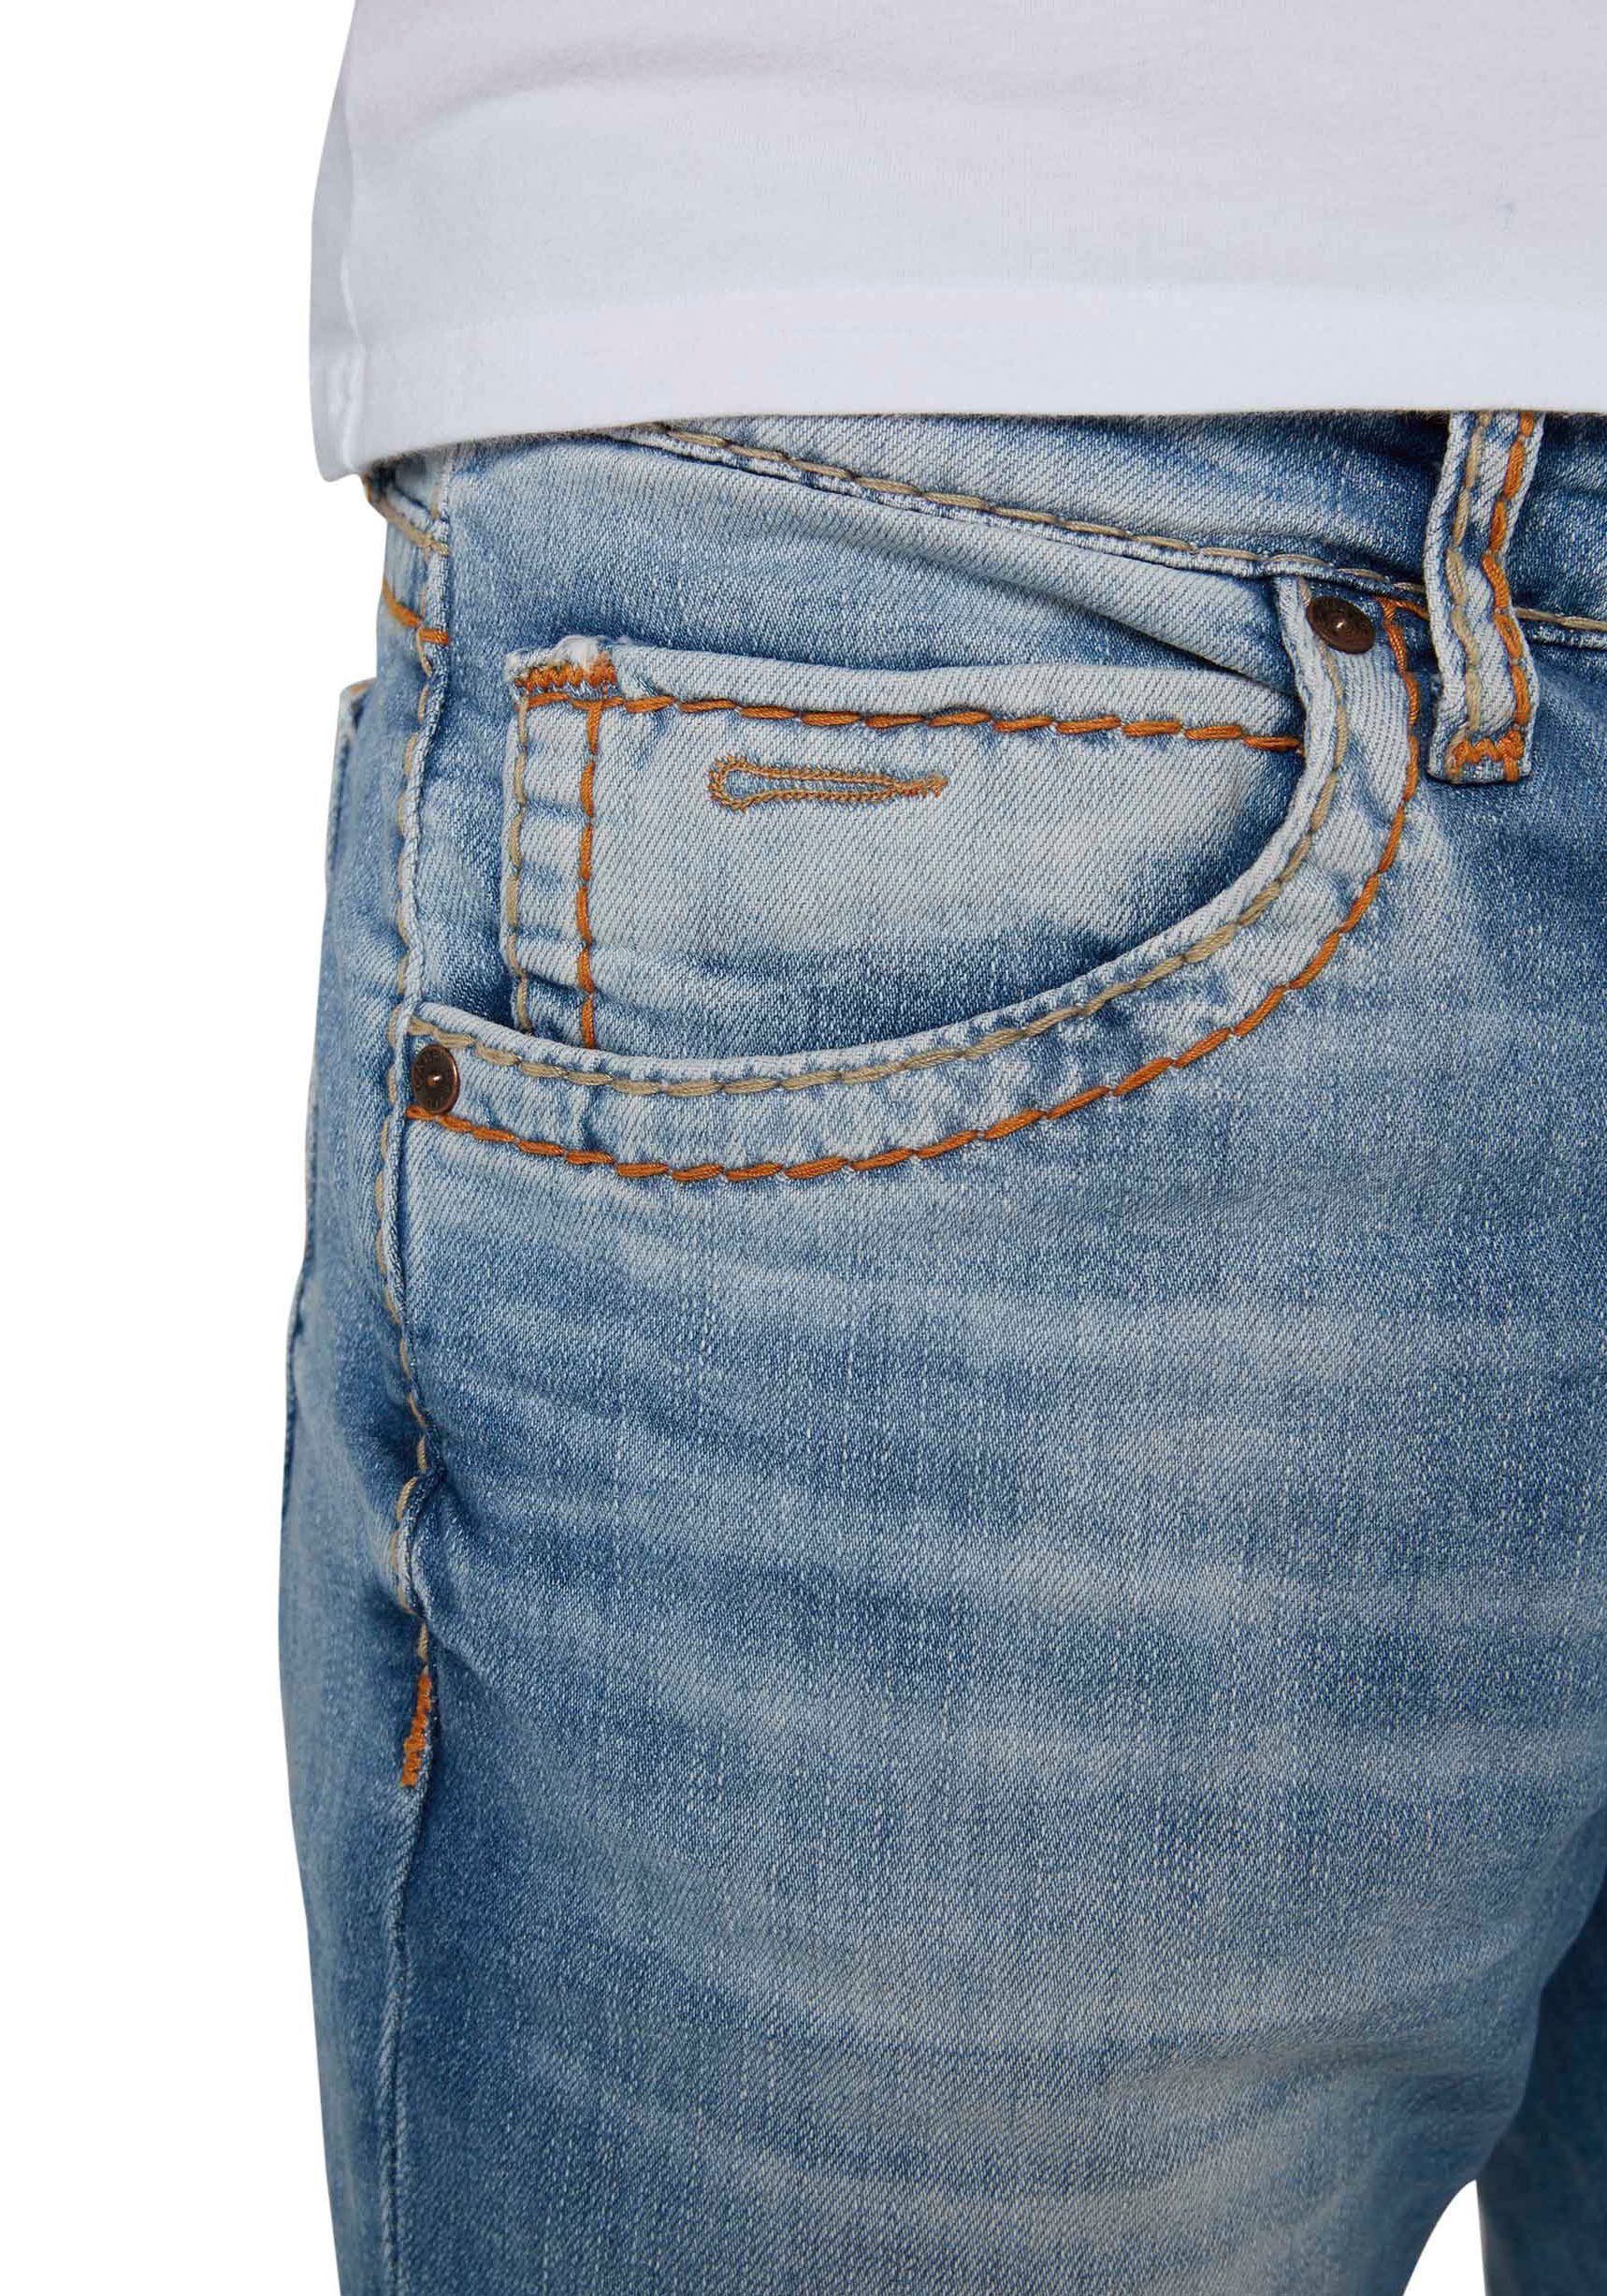 vintage mit NI:CO:R611 CAMP DAVID Straight-Jeans Steppnähten light markanten